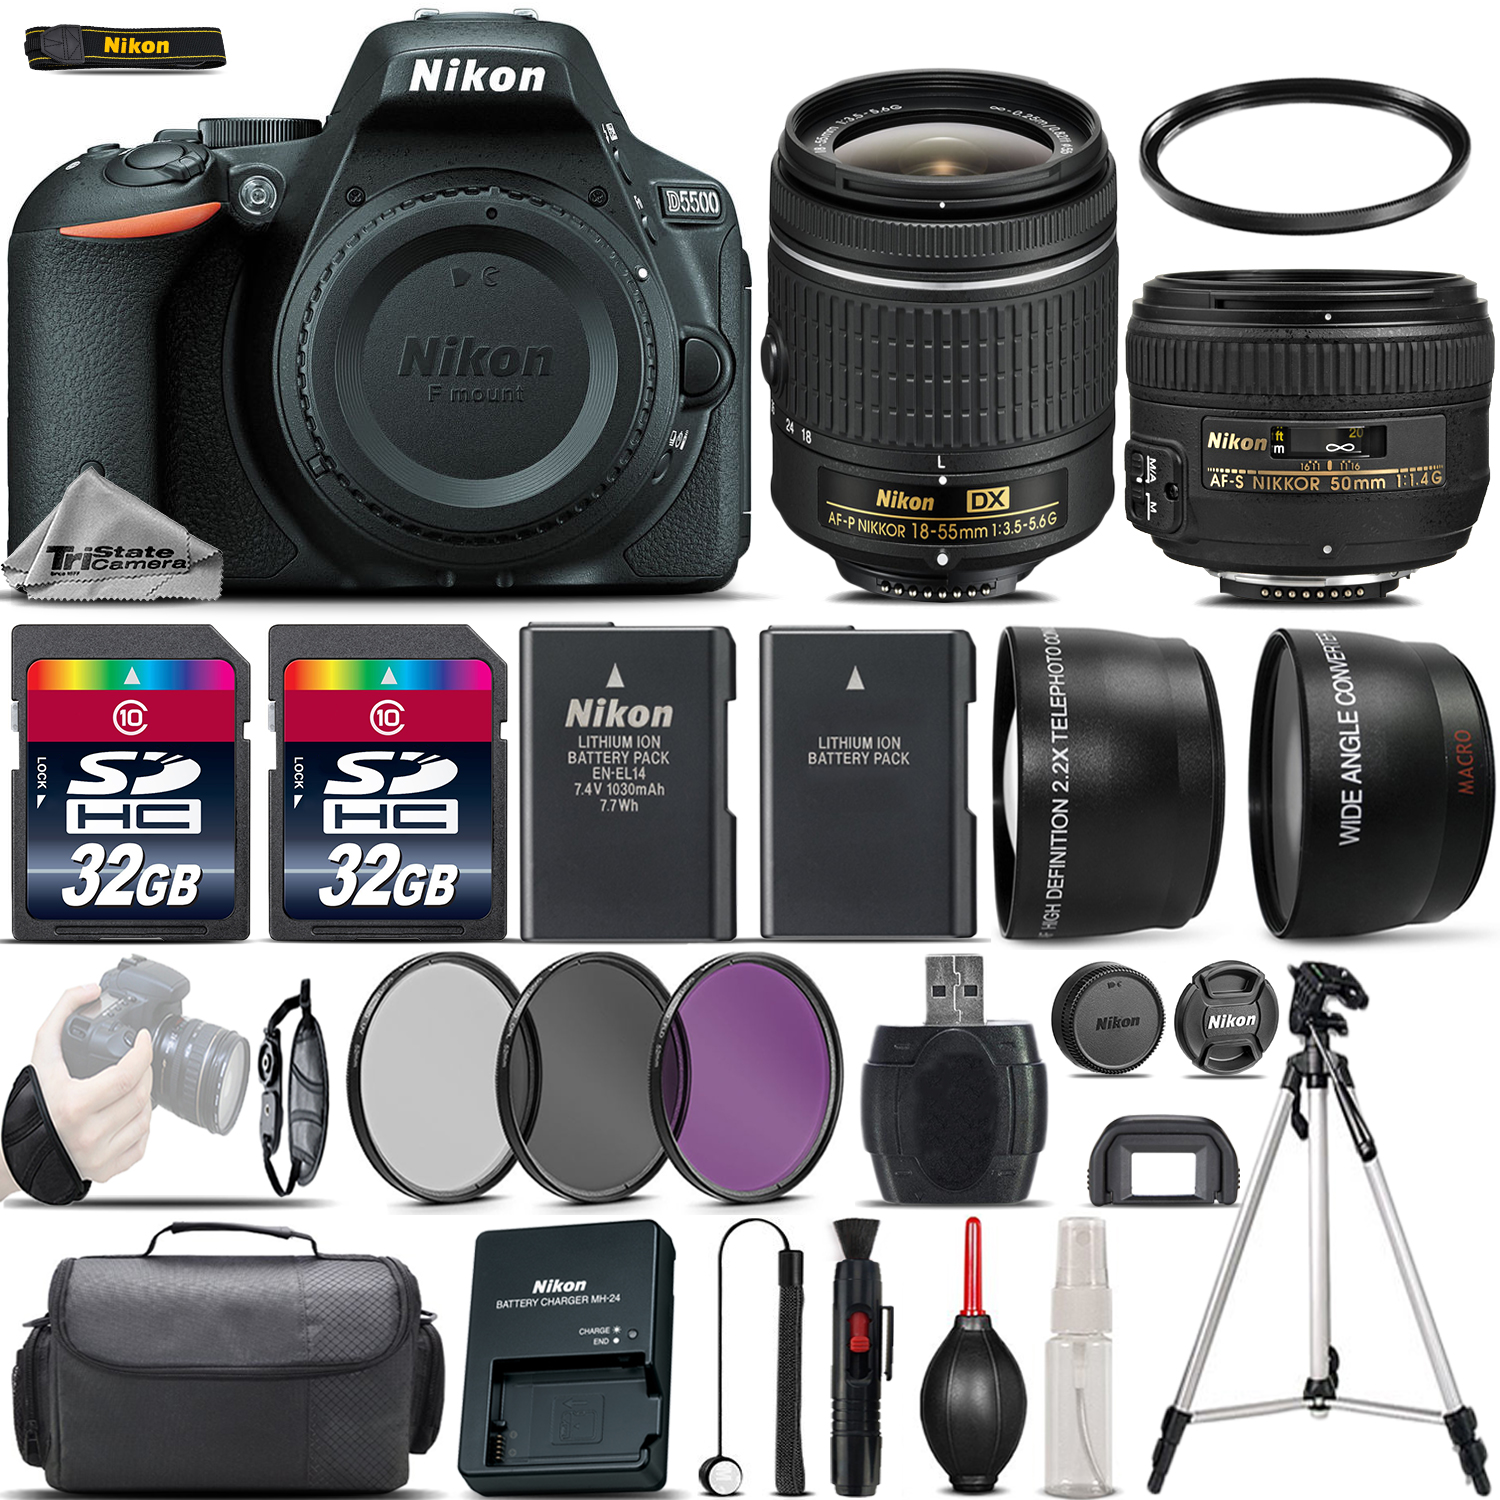 D5500 Digital SLR Camera + 18-55mm VR + 50mm 1.4G Lens + 64GB - 4 Lens Kit *FREE SHIPPING*